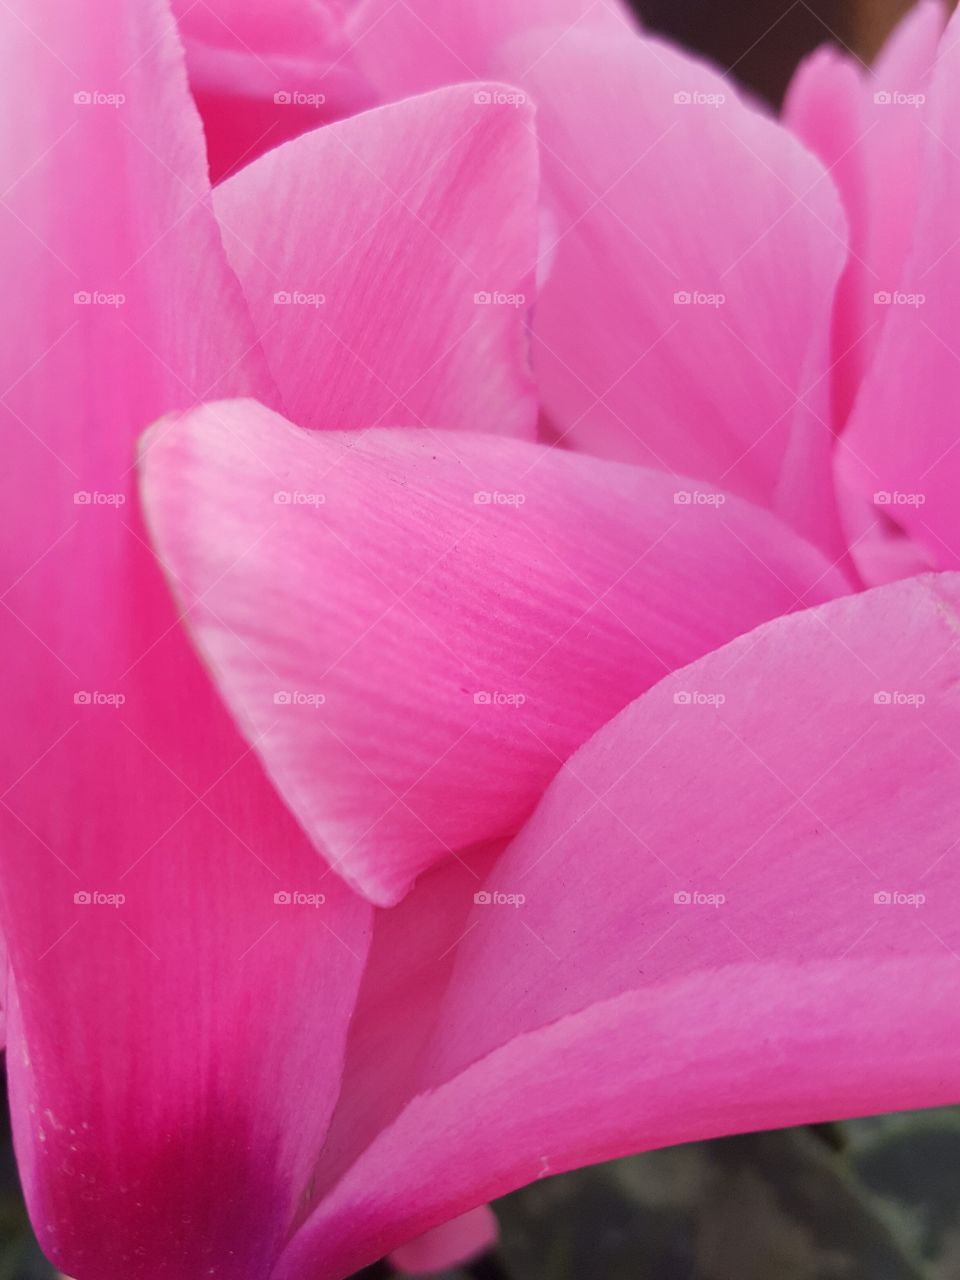 pink flower petals